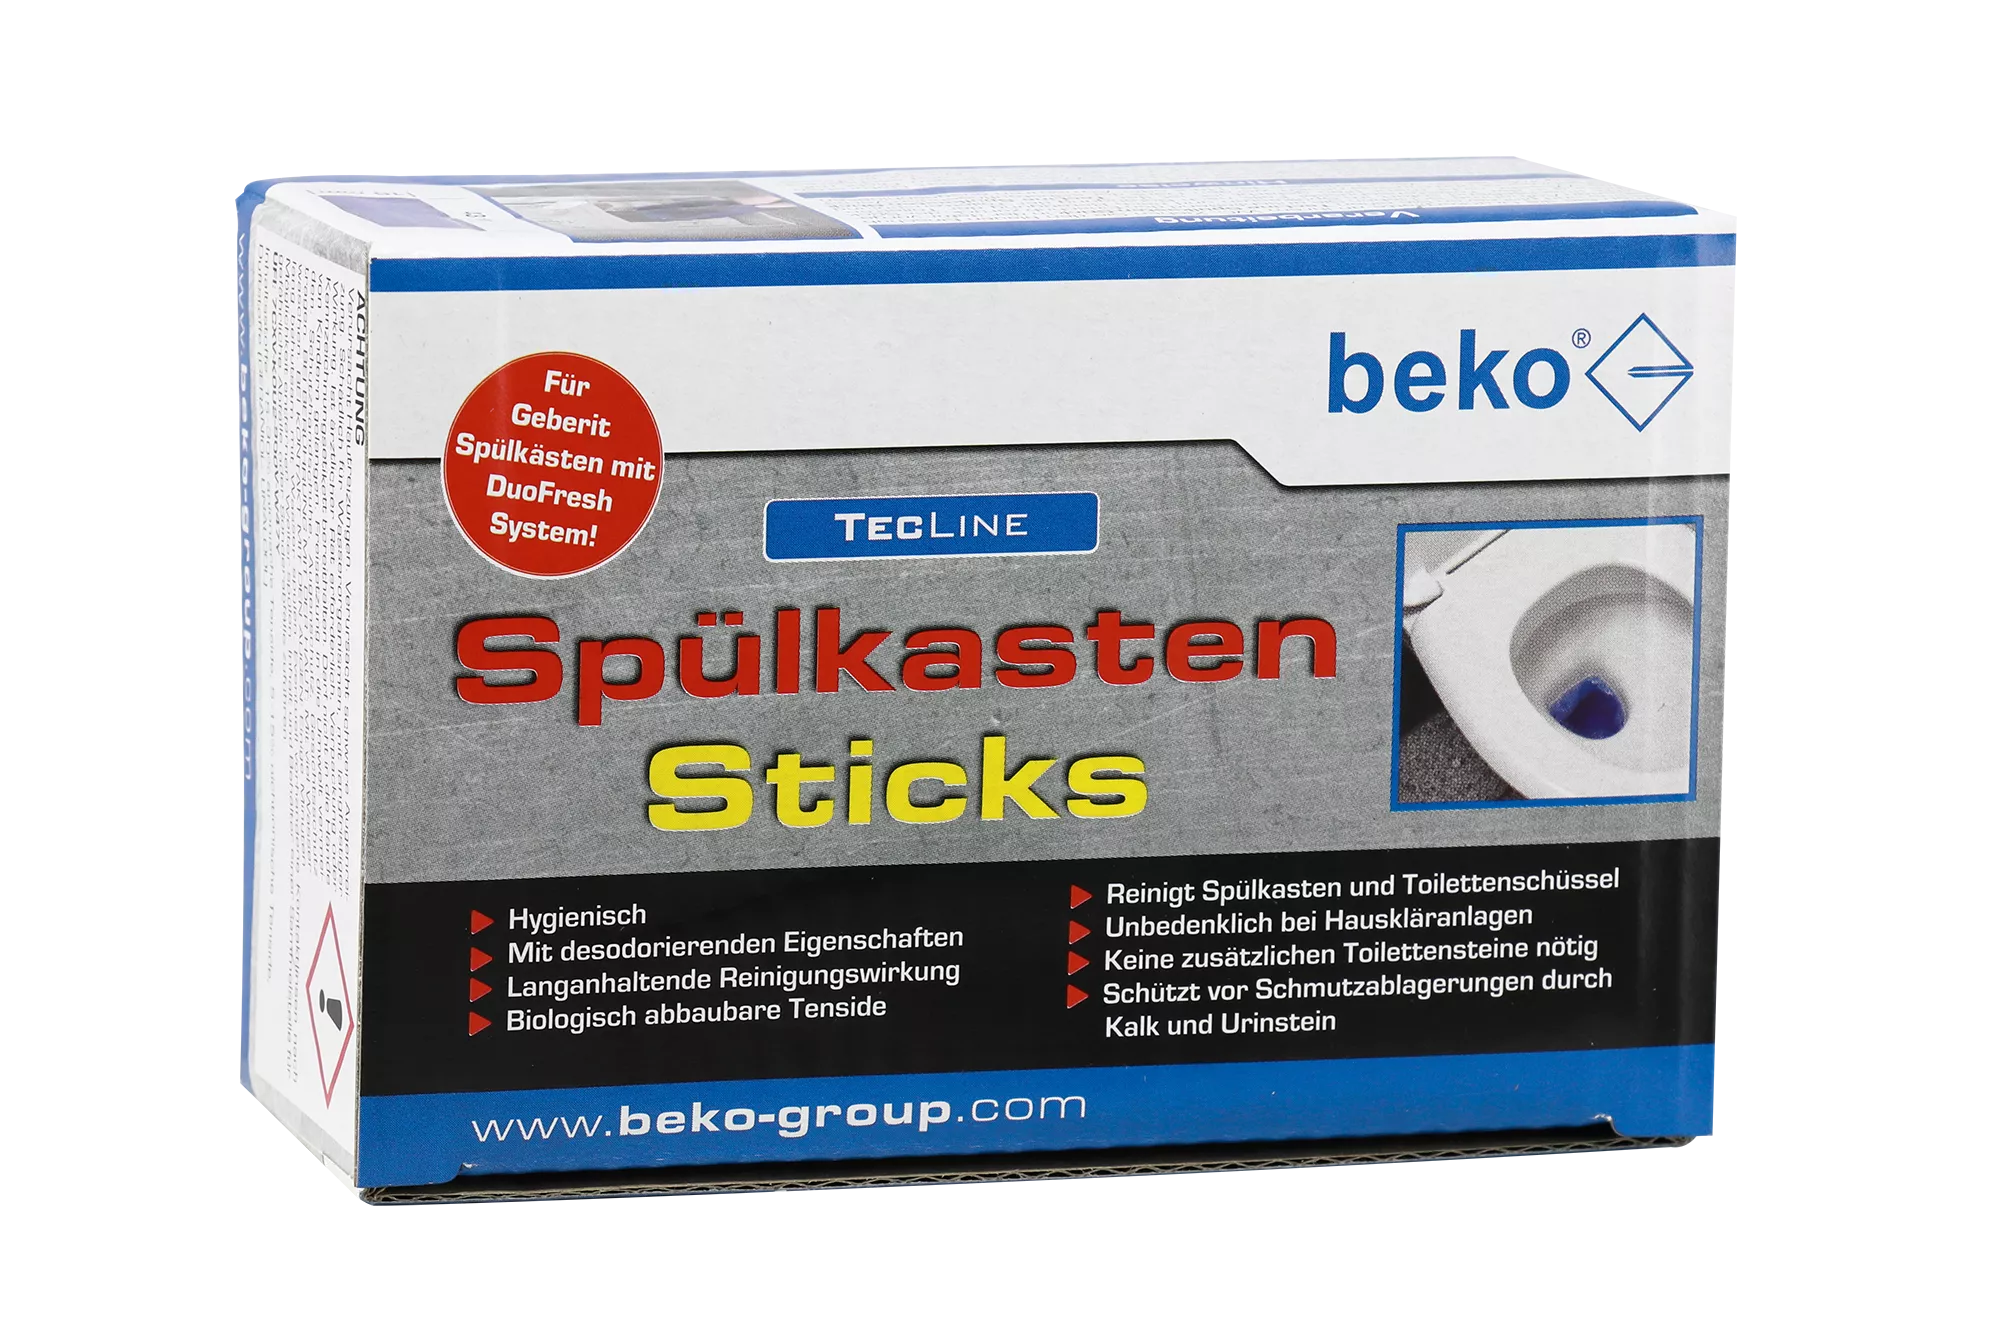 TecLine Spülkasten Sticks, 1 Pack = 20 Sticks